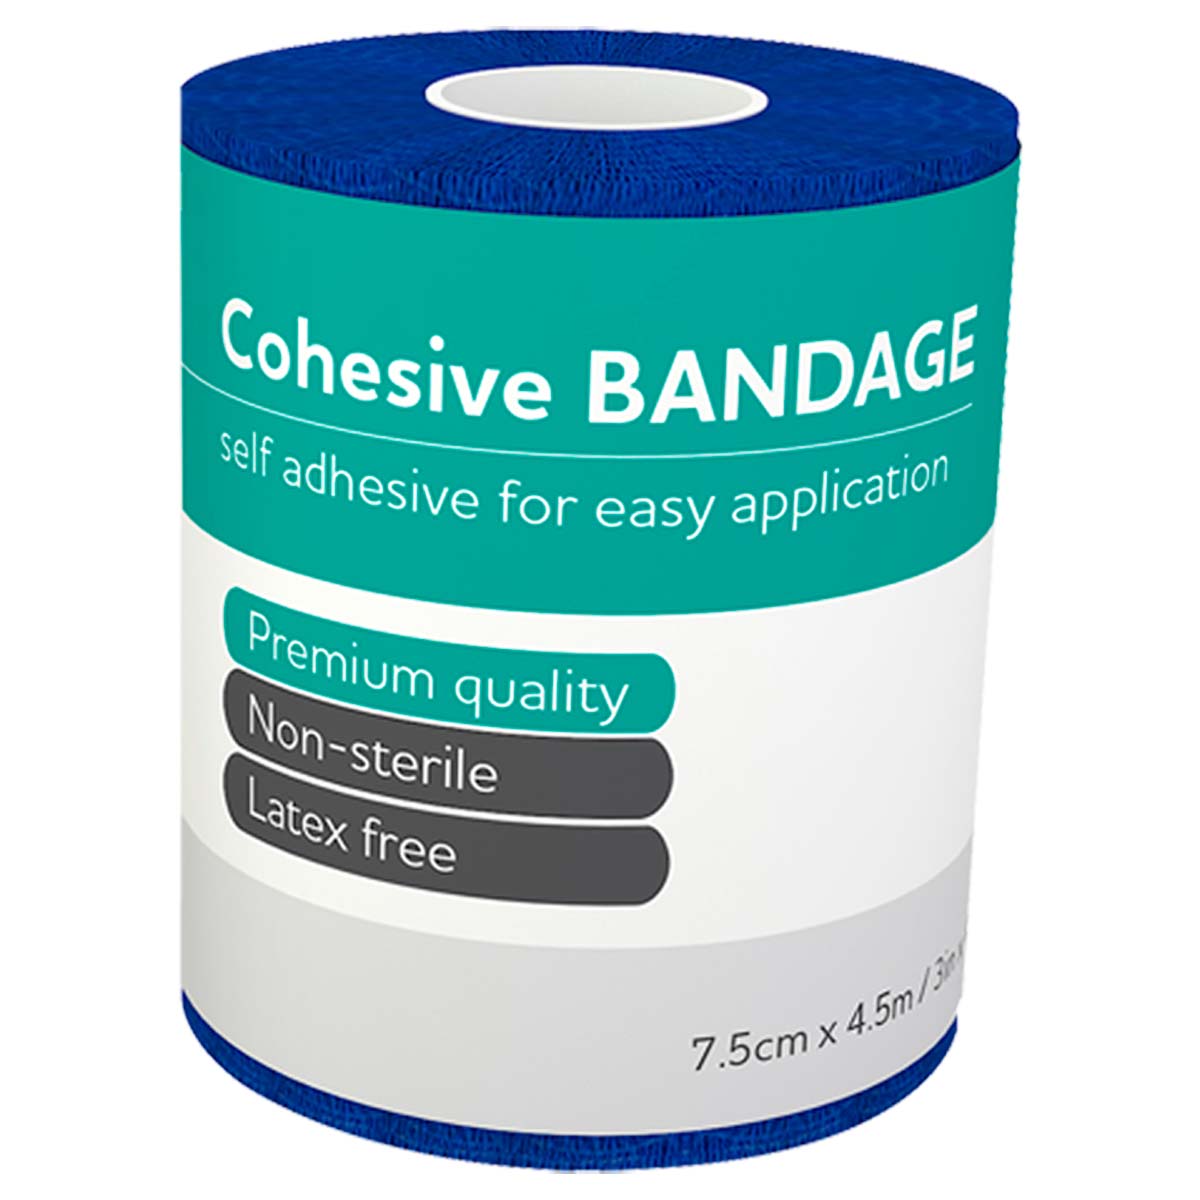 AEROBAN Cohesive Bandage 4.5M